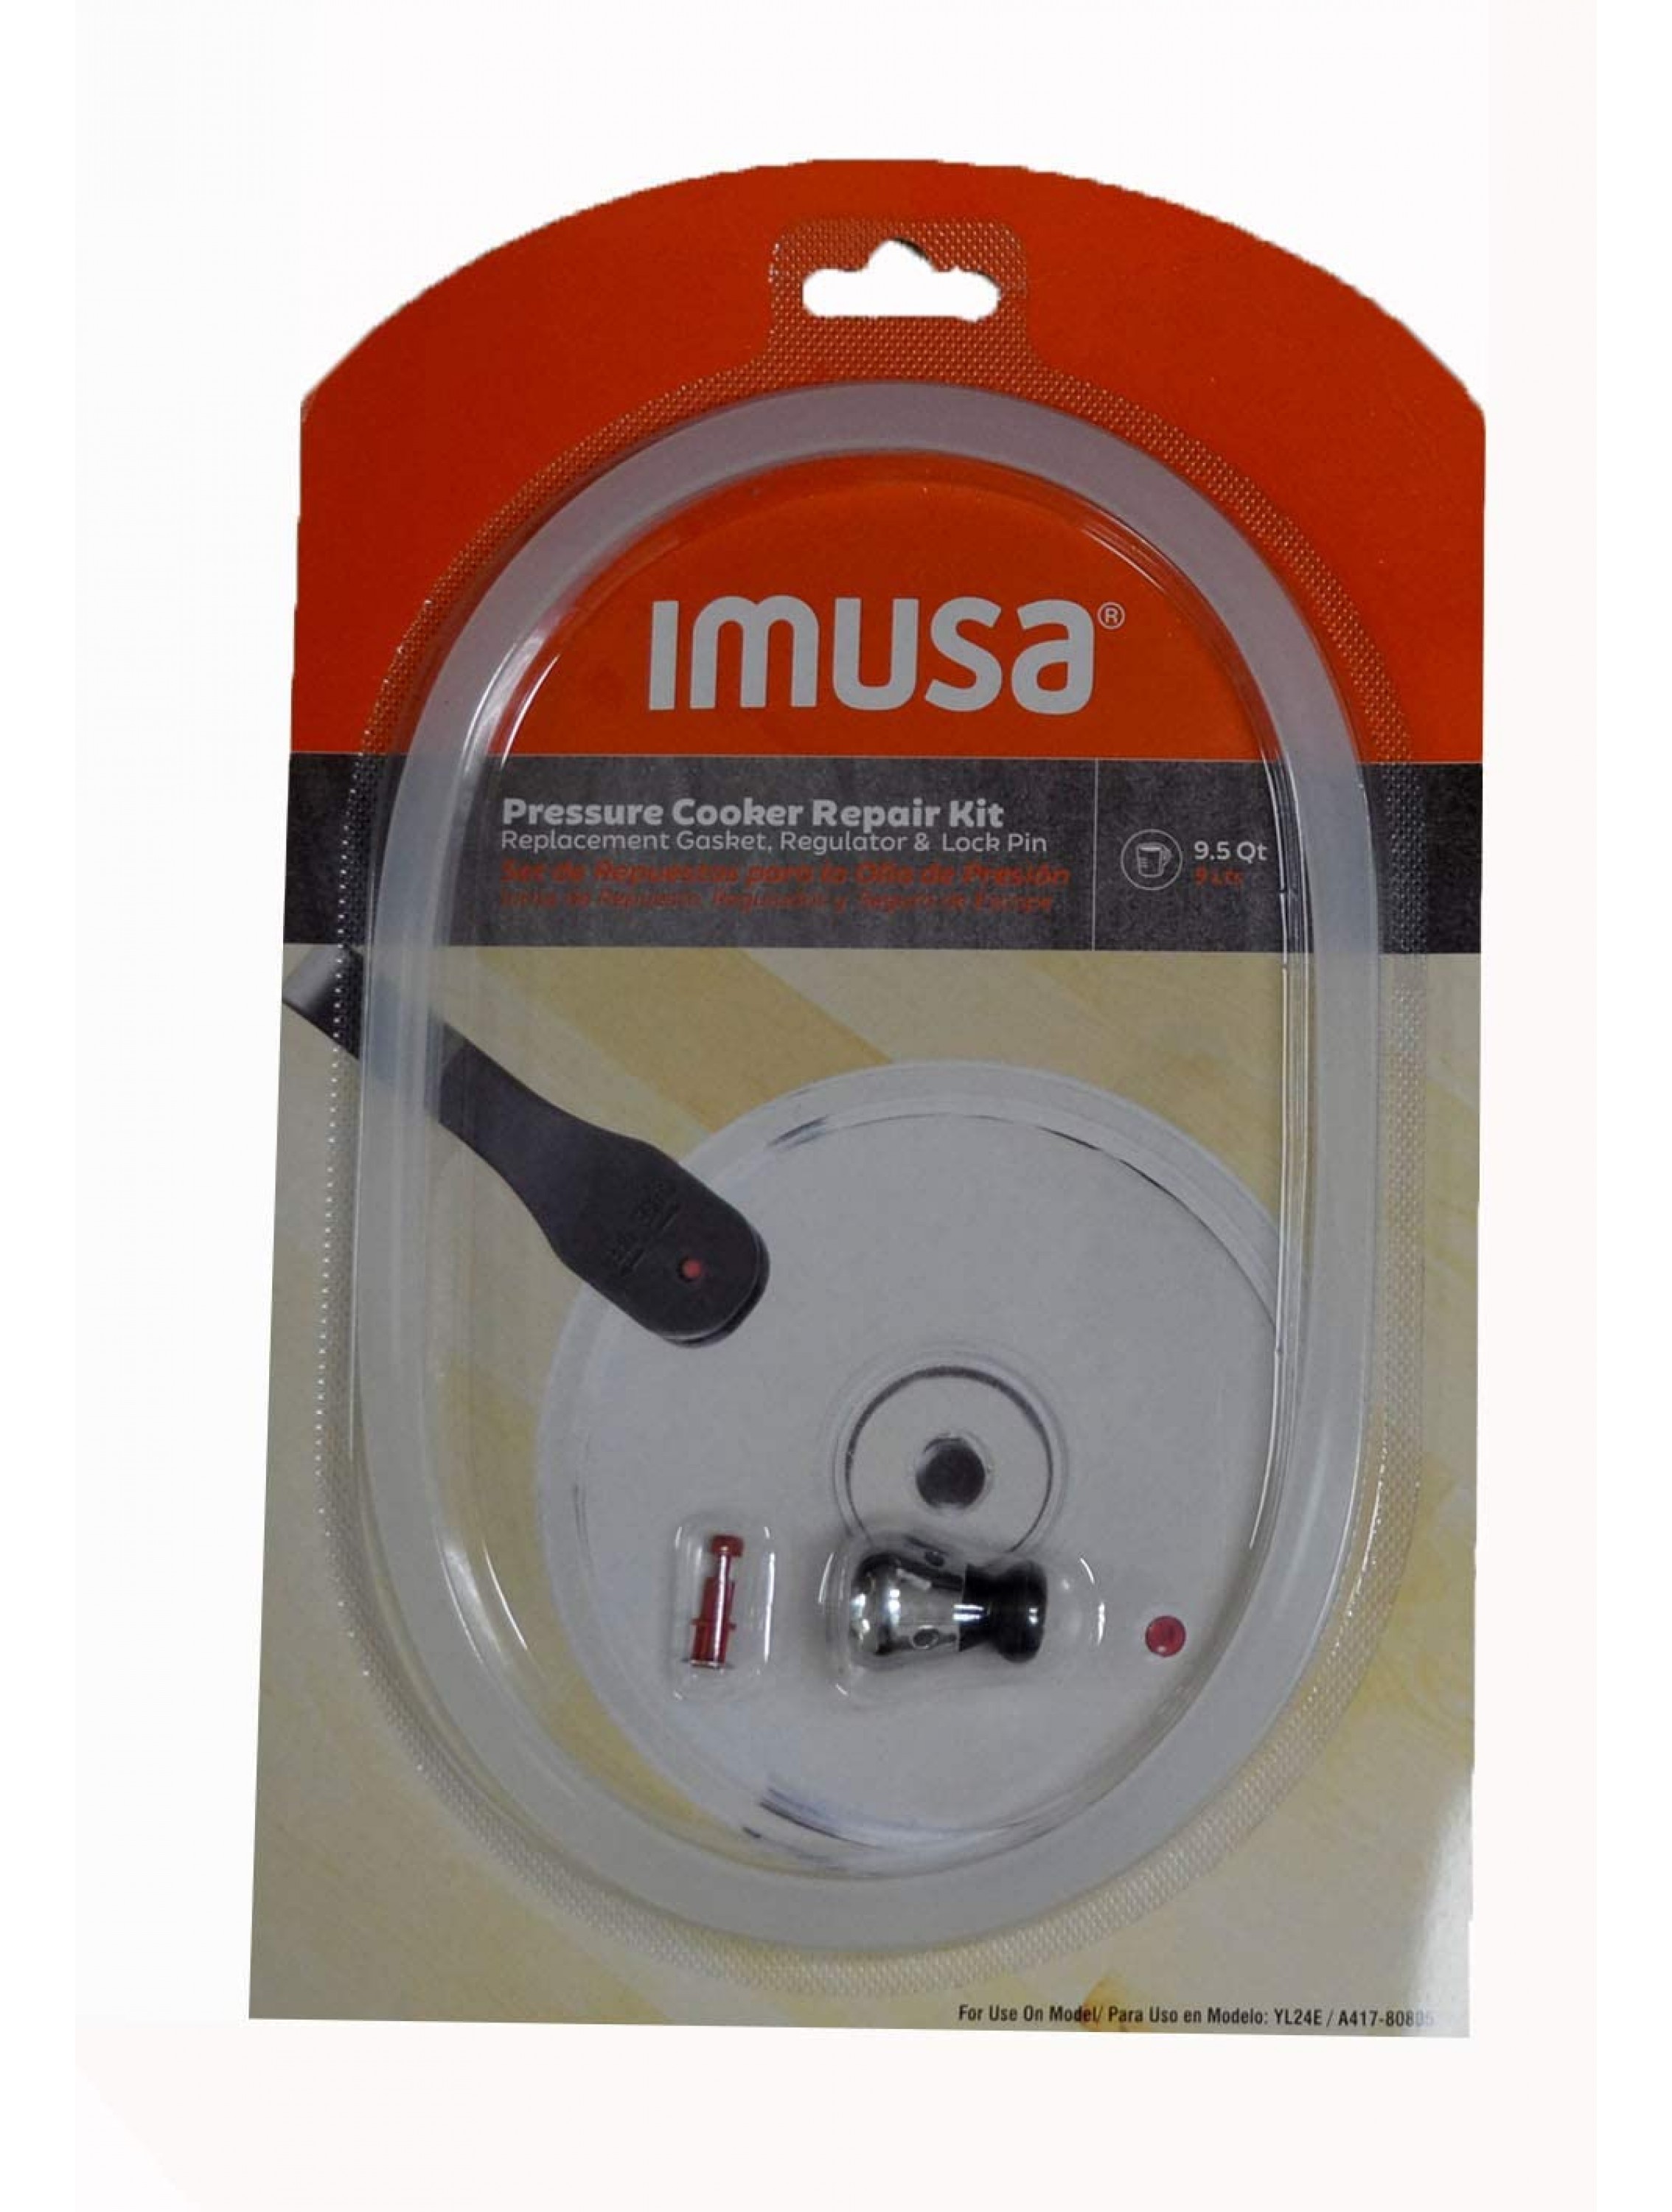 IMUSA USA 9.5Qt Basic Pressure Cooker Repair Kit Red - BJMZLA3C4